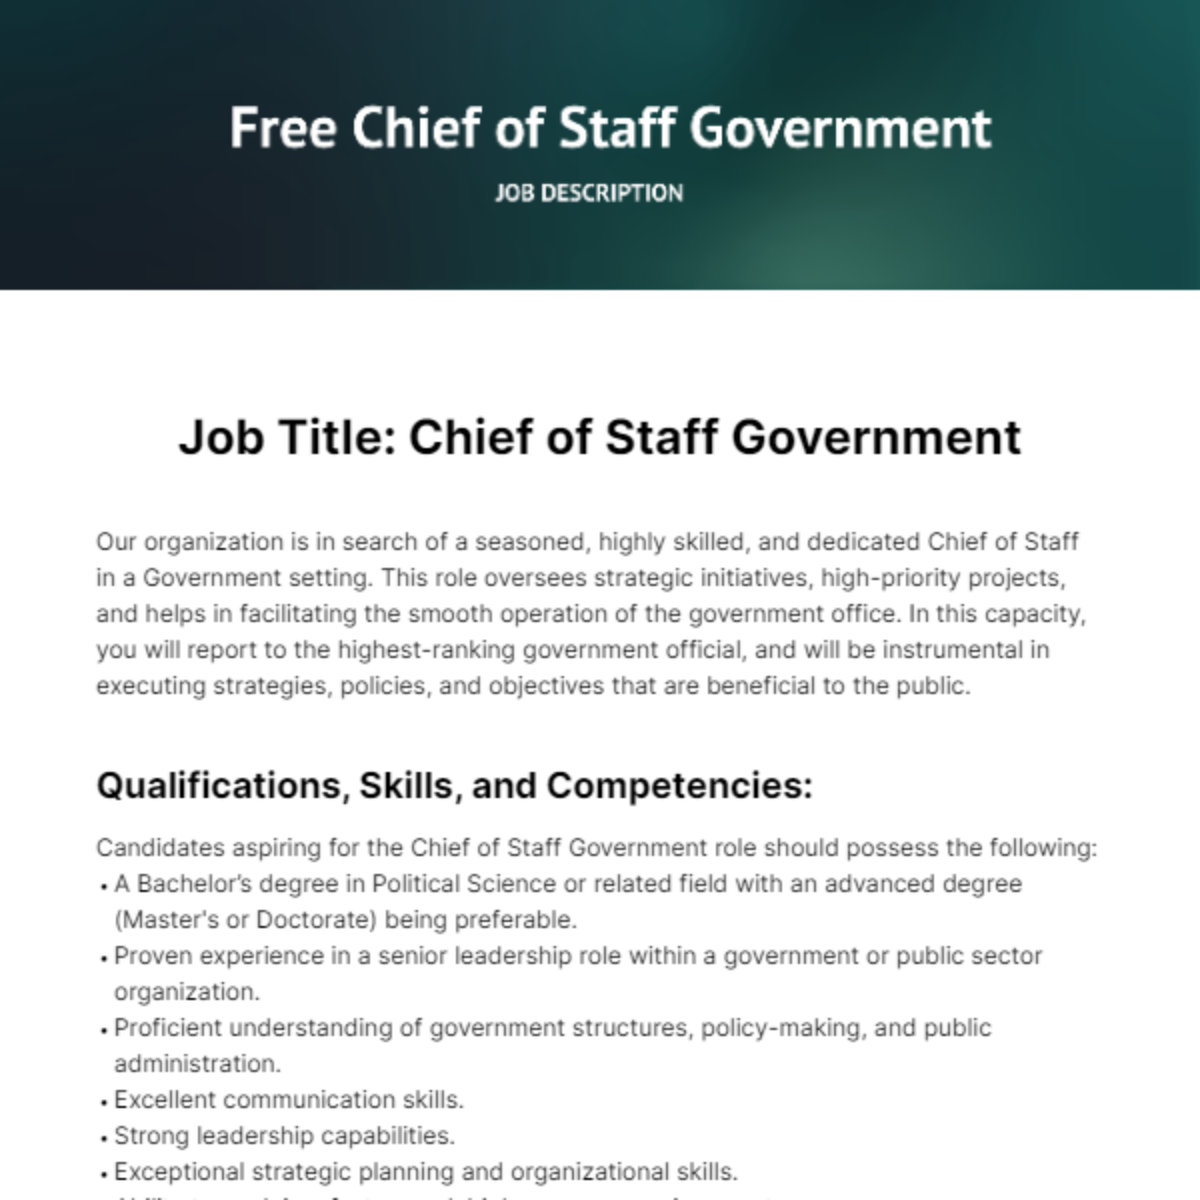 Chief of Staff Government Job Description Template